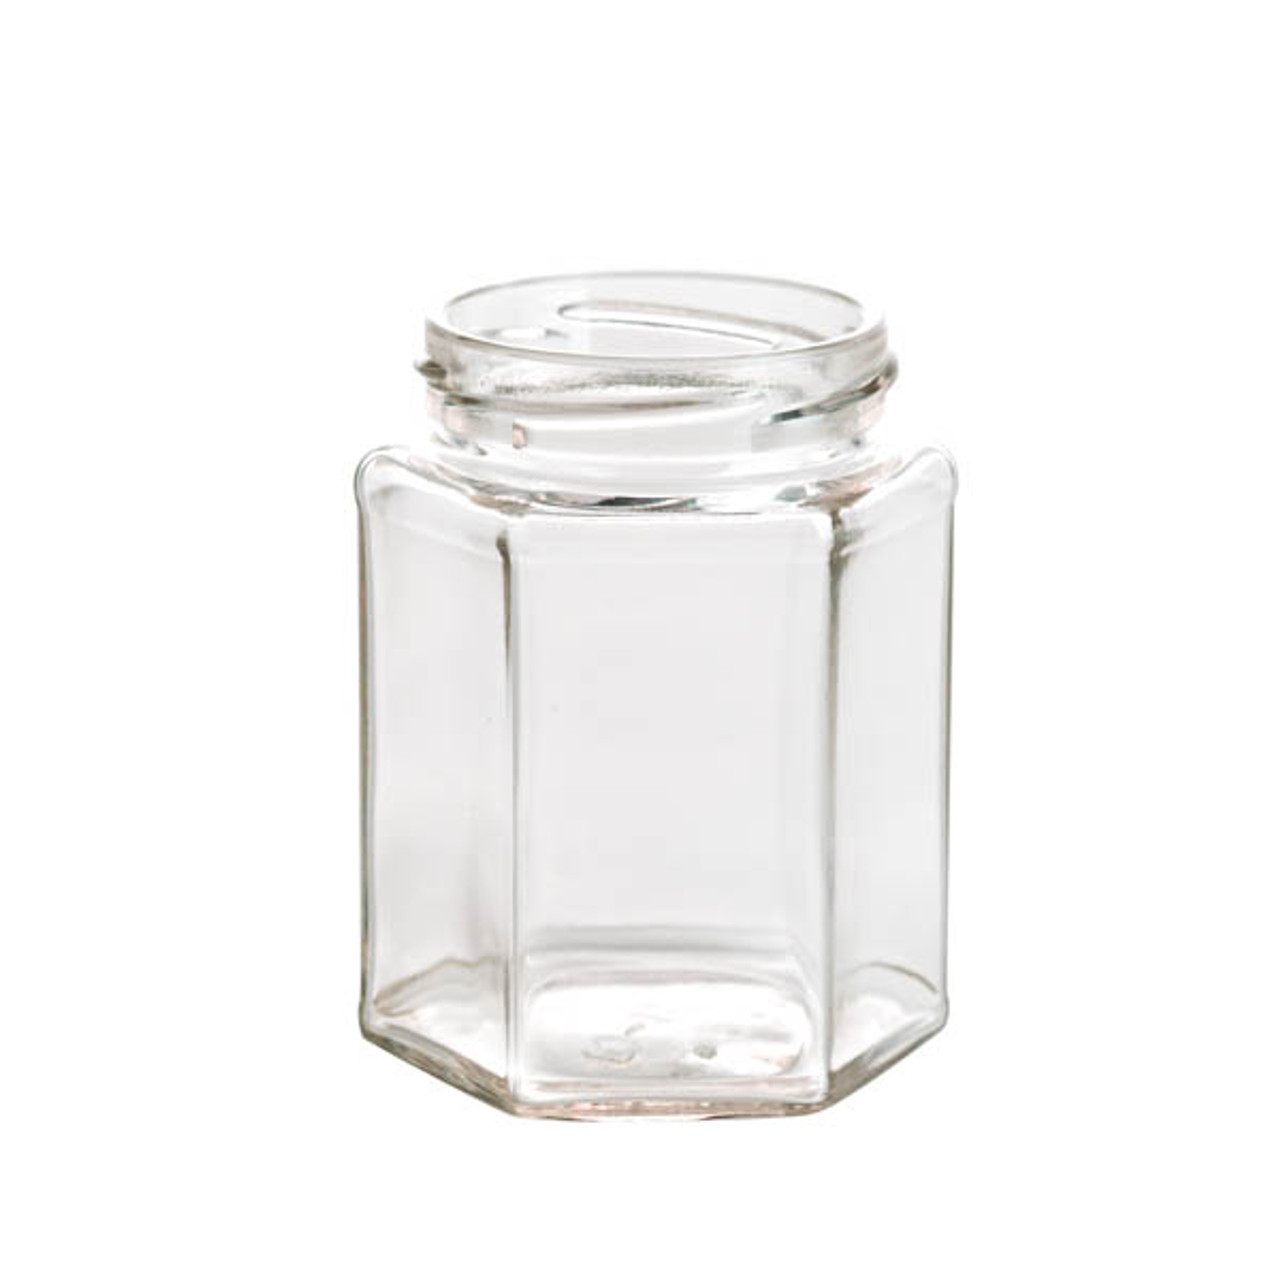 Square Glass Storage Jar, Candy Jars With Lids, Elegant Food